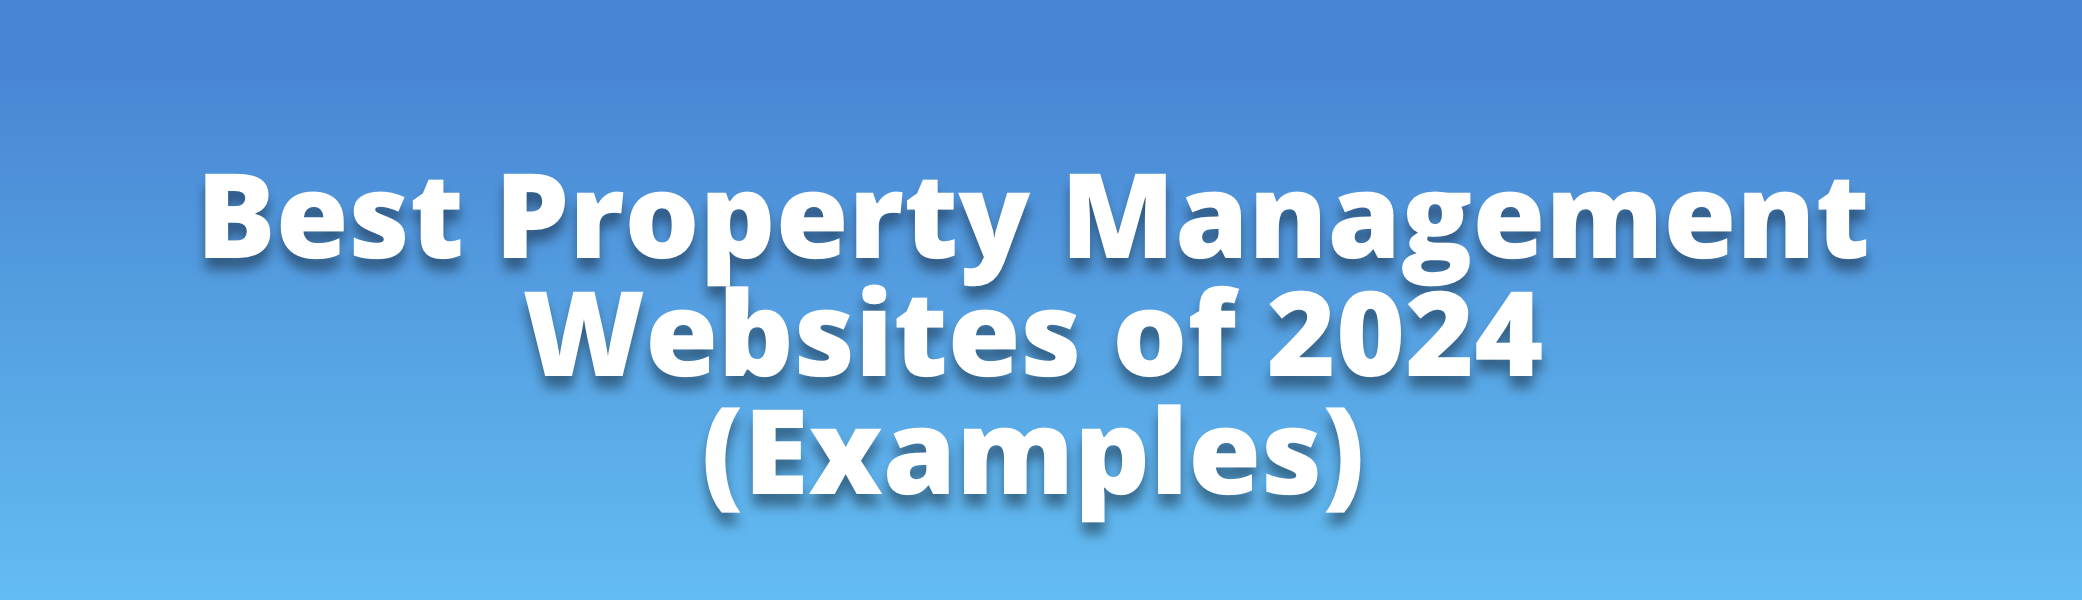 Best Property Management Websites of 2024 (Examples)